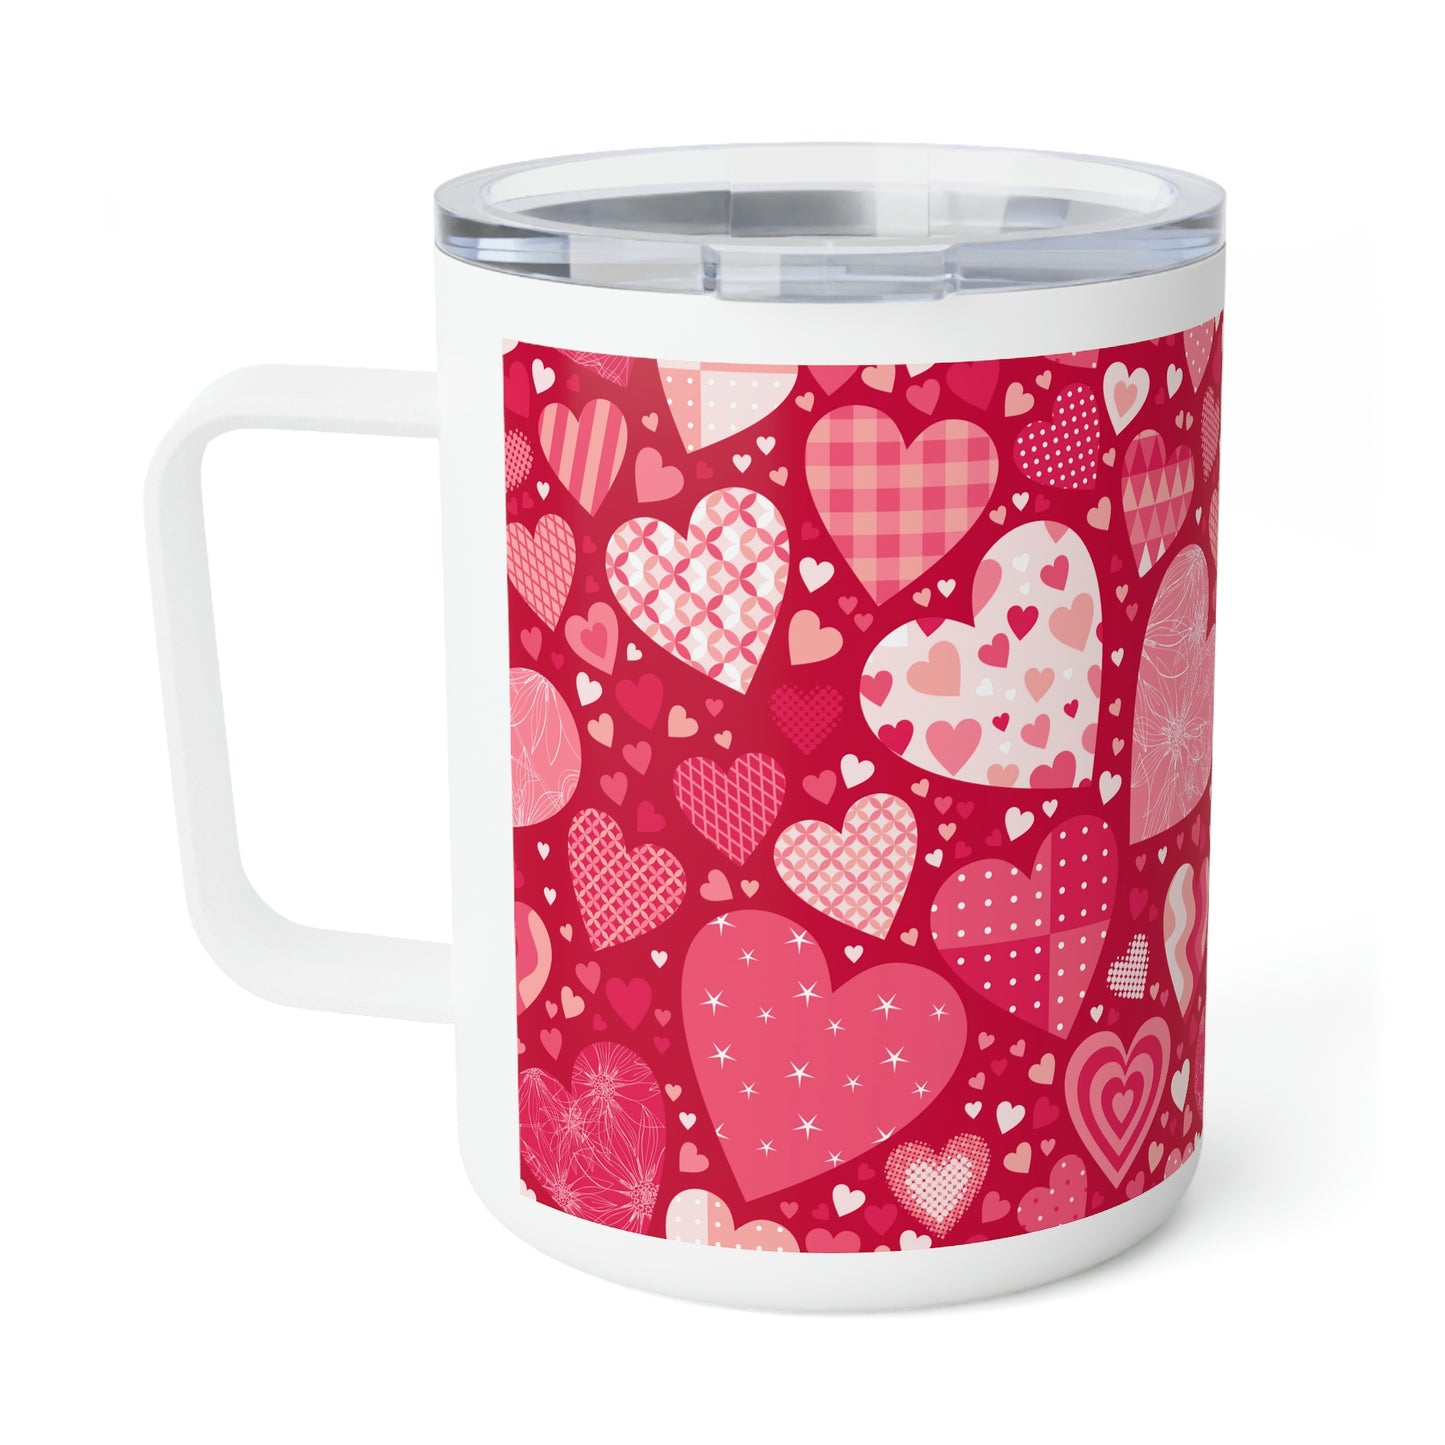 Blissful Hearts Insulated Coffee Mug, 10oz